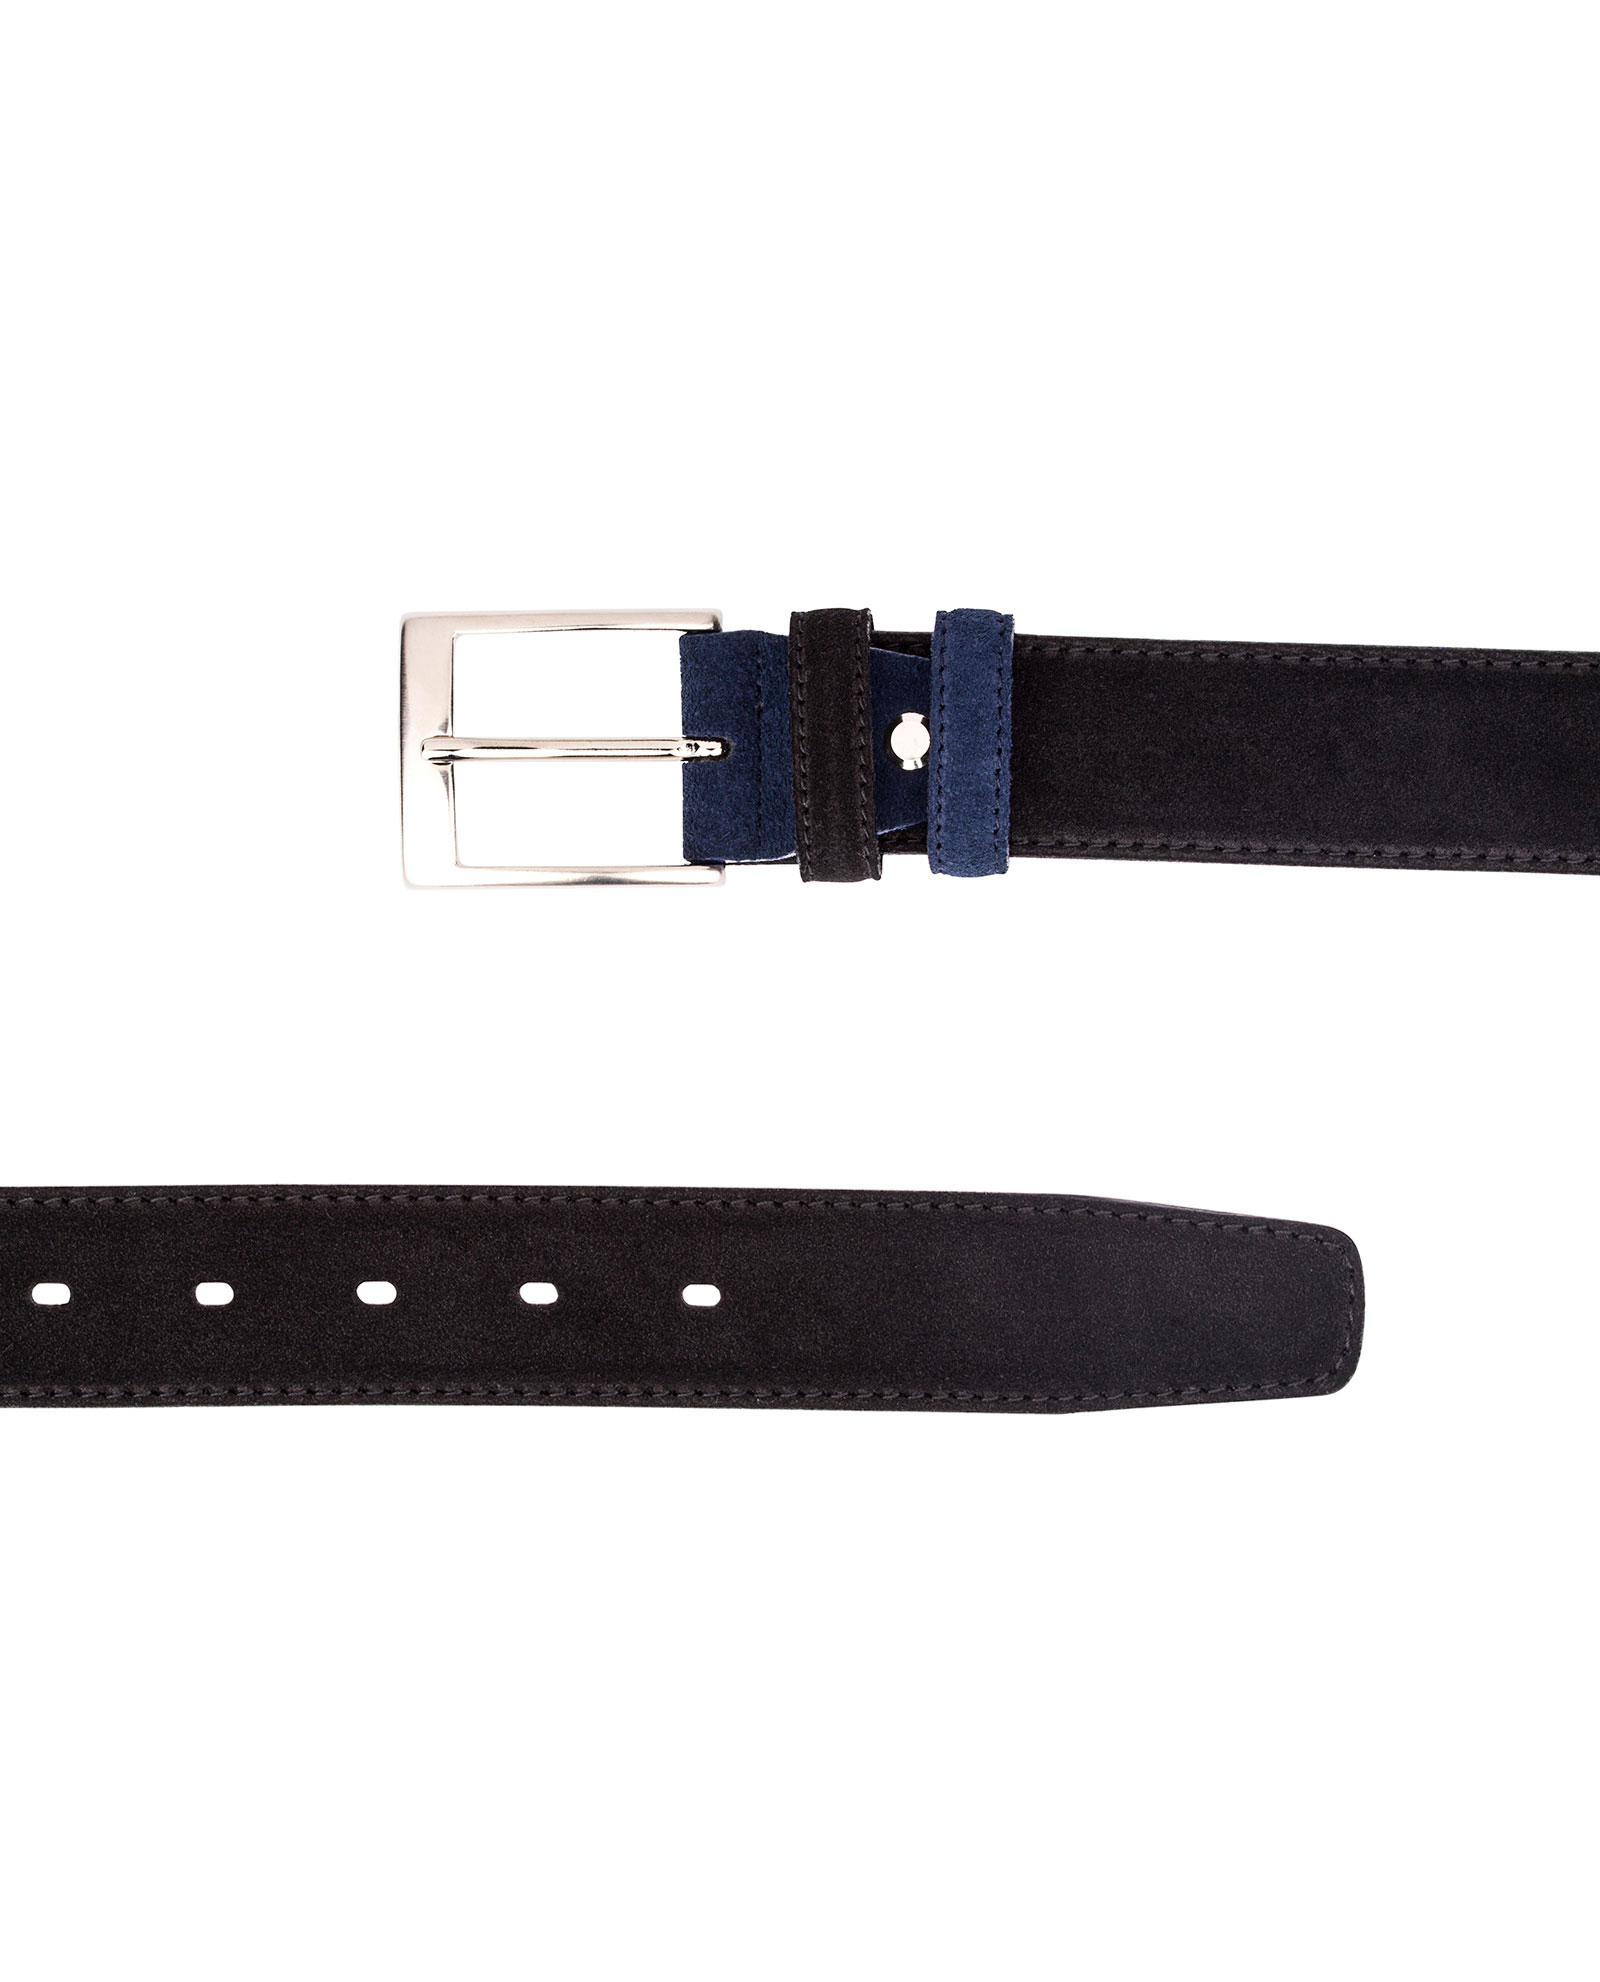 Buy Black Suede Belt with Blue | LeatherBeltsOnline.com | Free Shipping